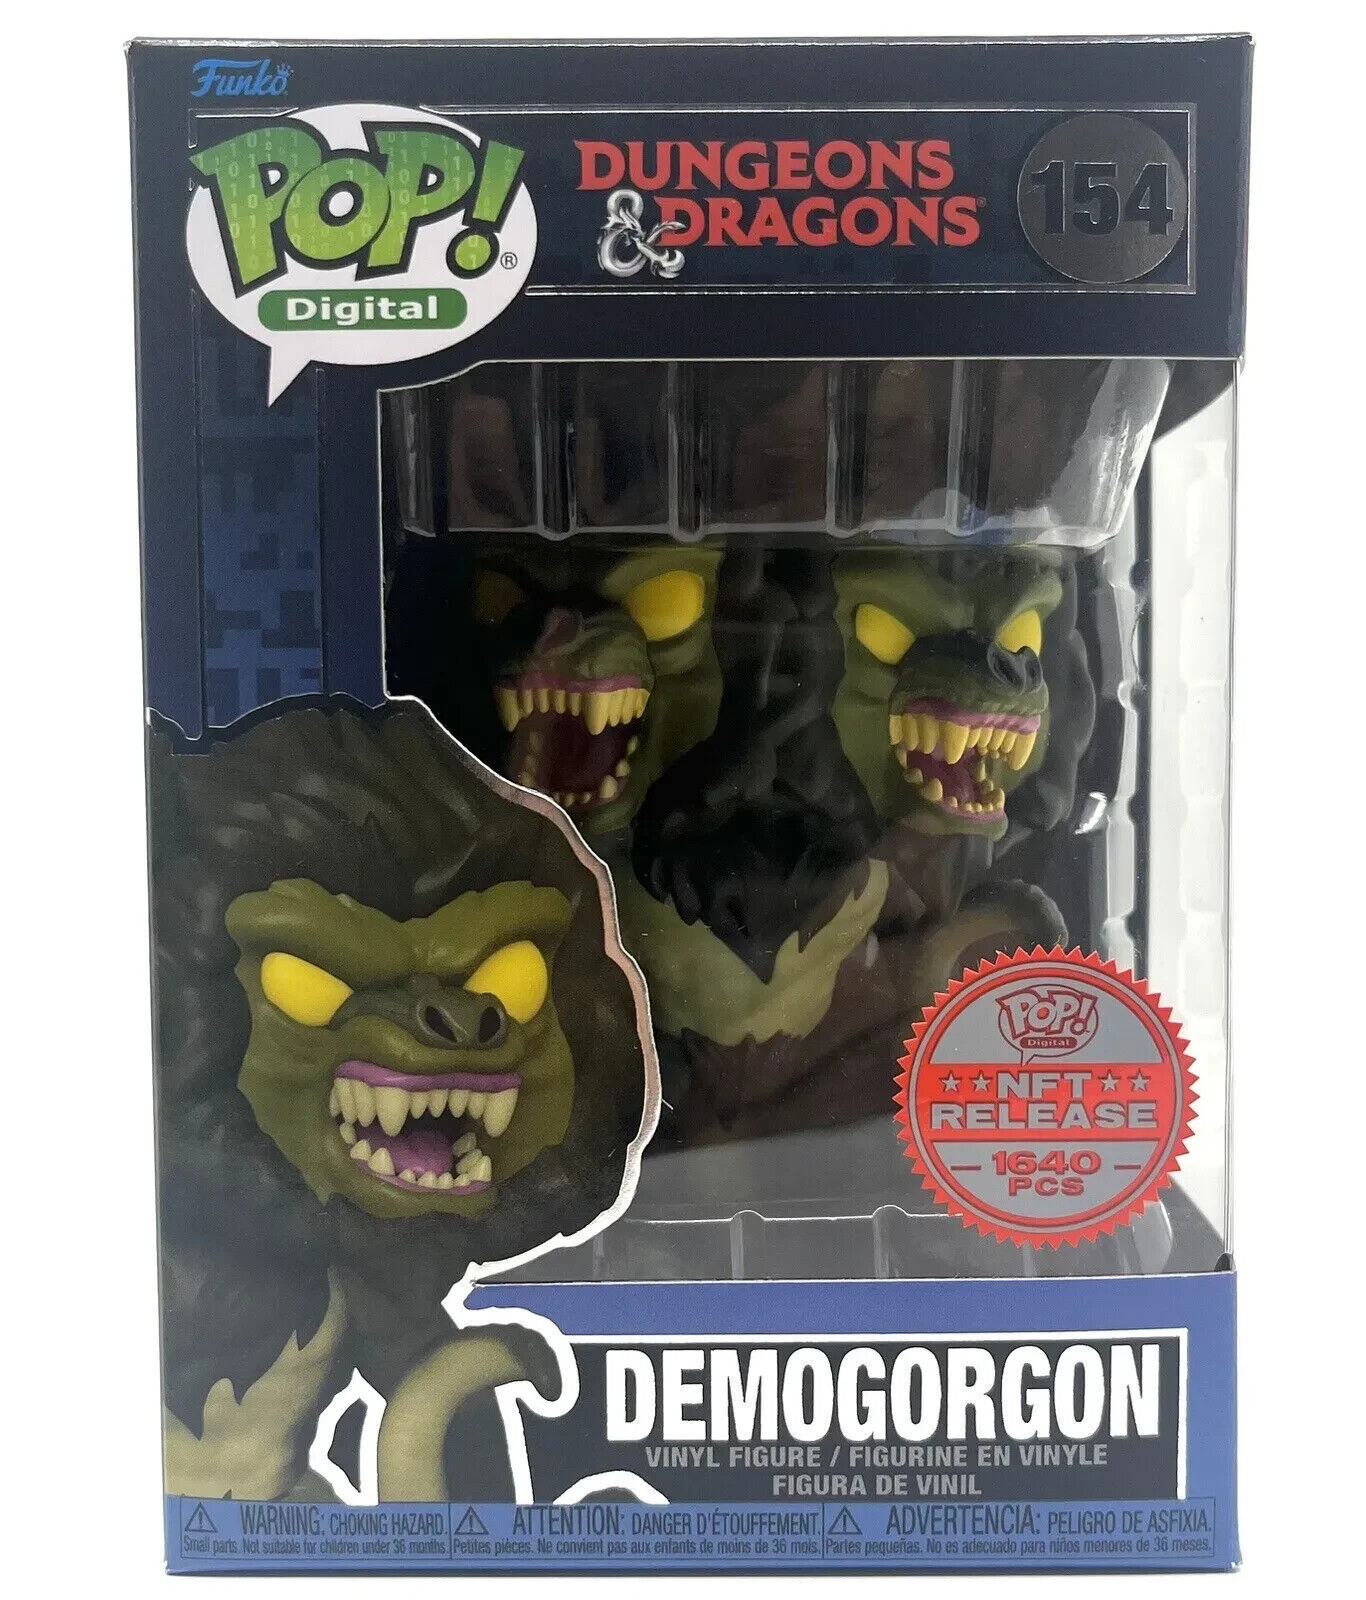 Funko Pop Digital Dungeons & Dragons Demogorgon Legendary #154 LE 1640 Pieces